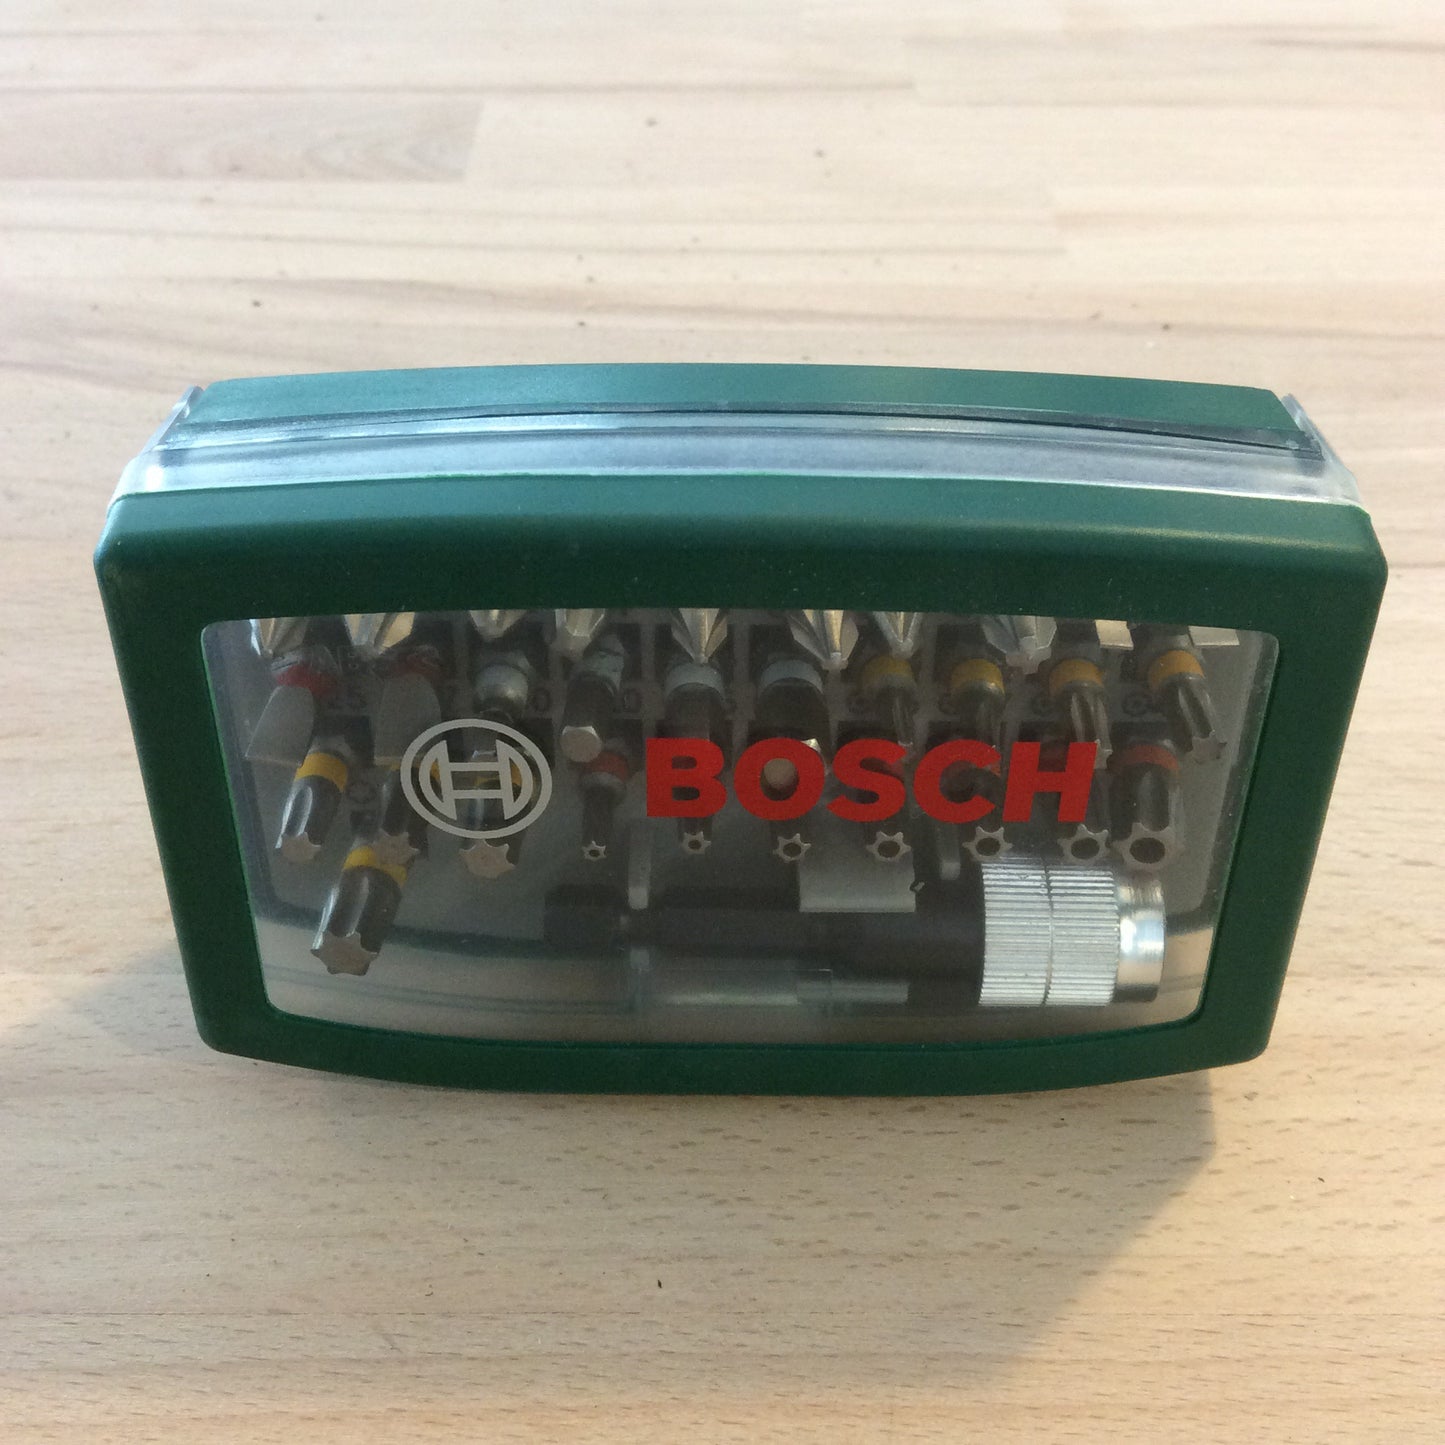 Bosch 32pc Screwdriver Bit Set